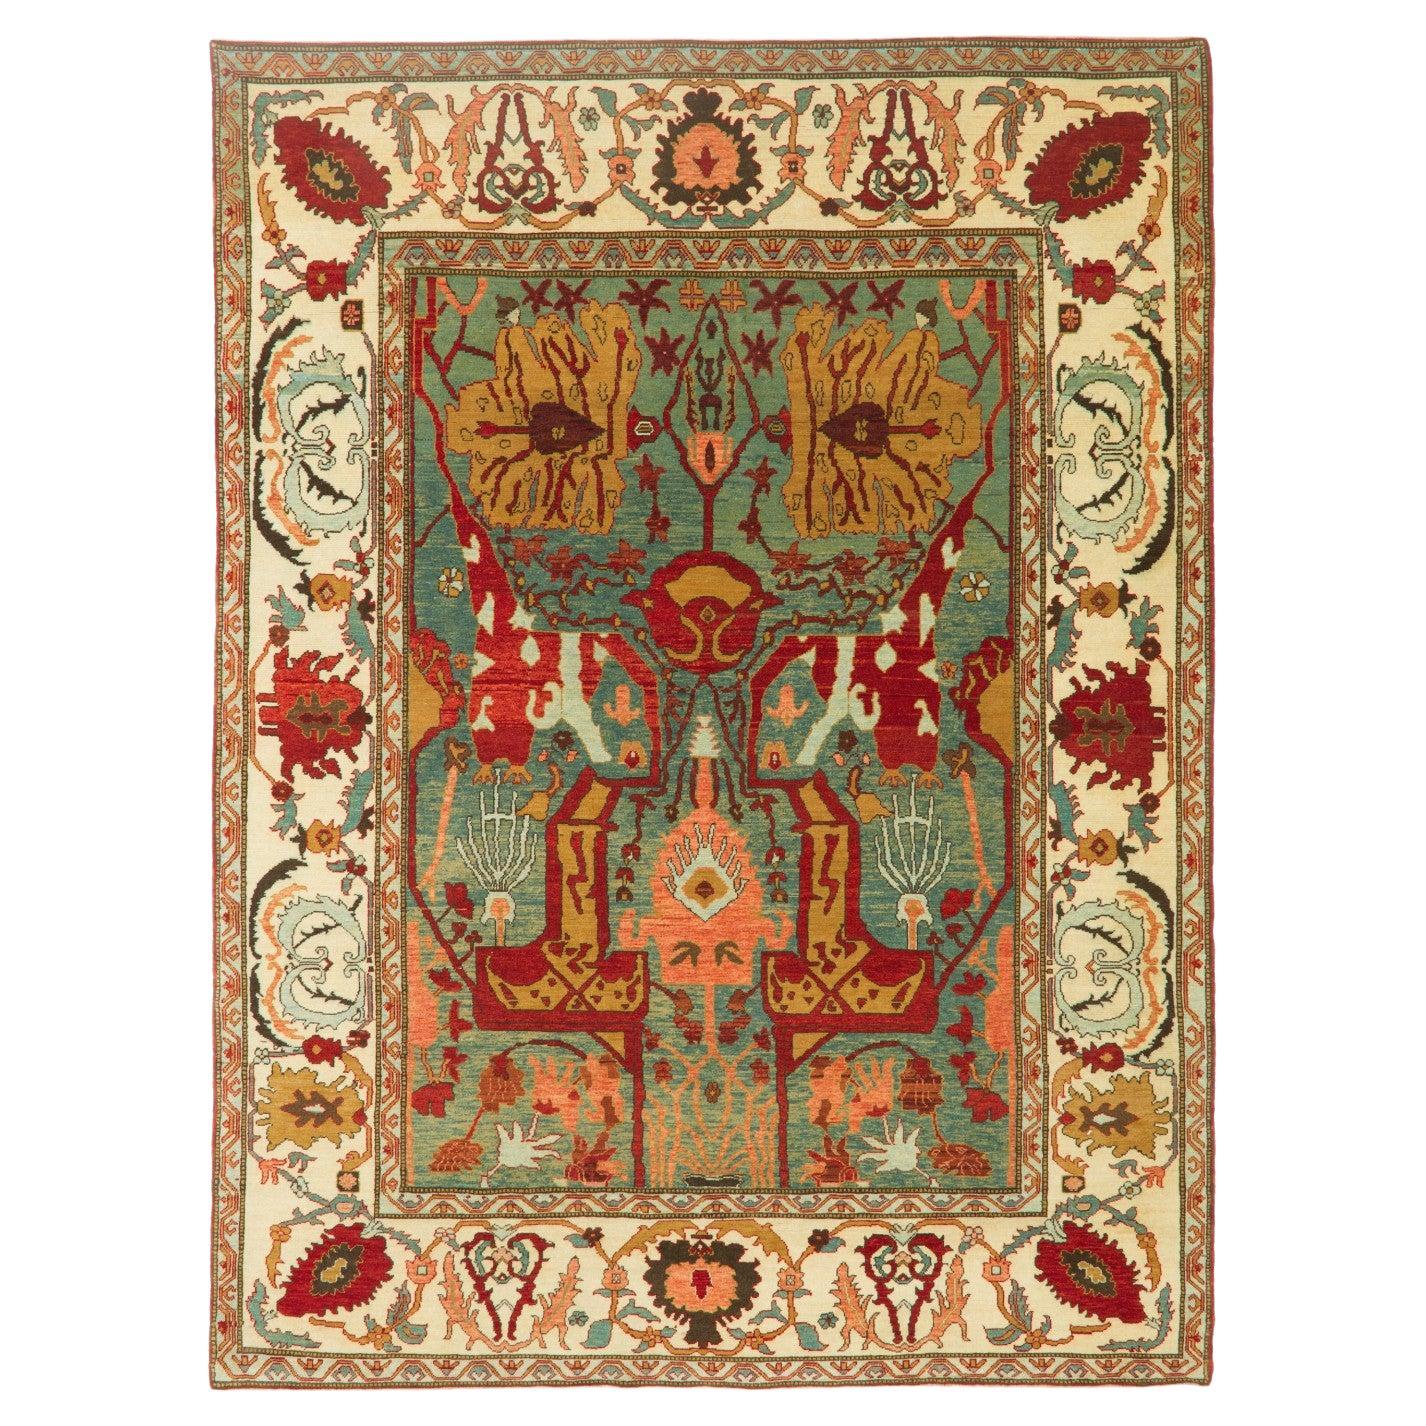 Ararat Rugs Gerous Arabesque Rug, Antique Persian Revival Carpet, Natural Dyed